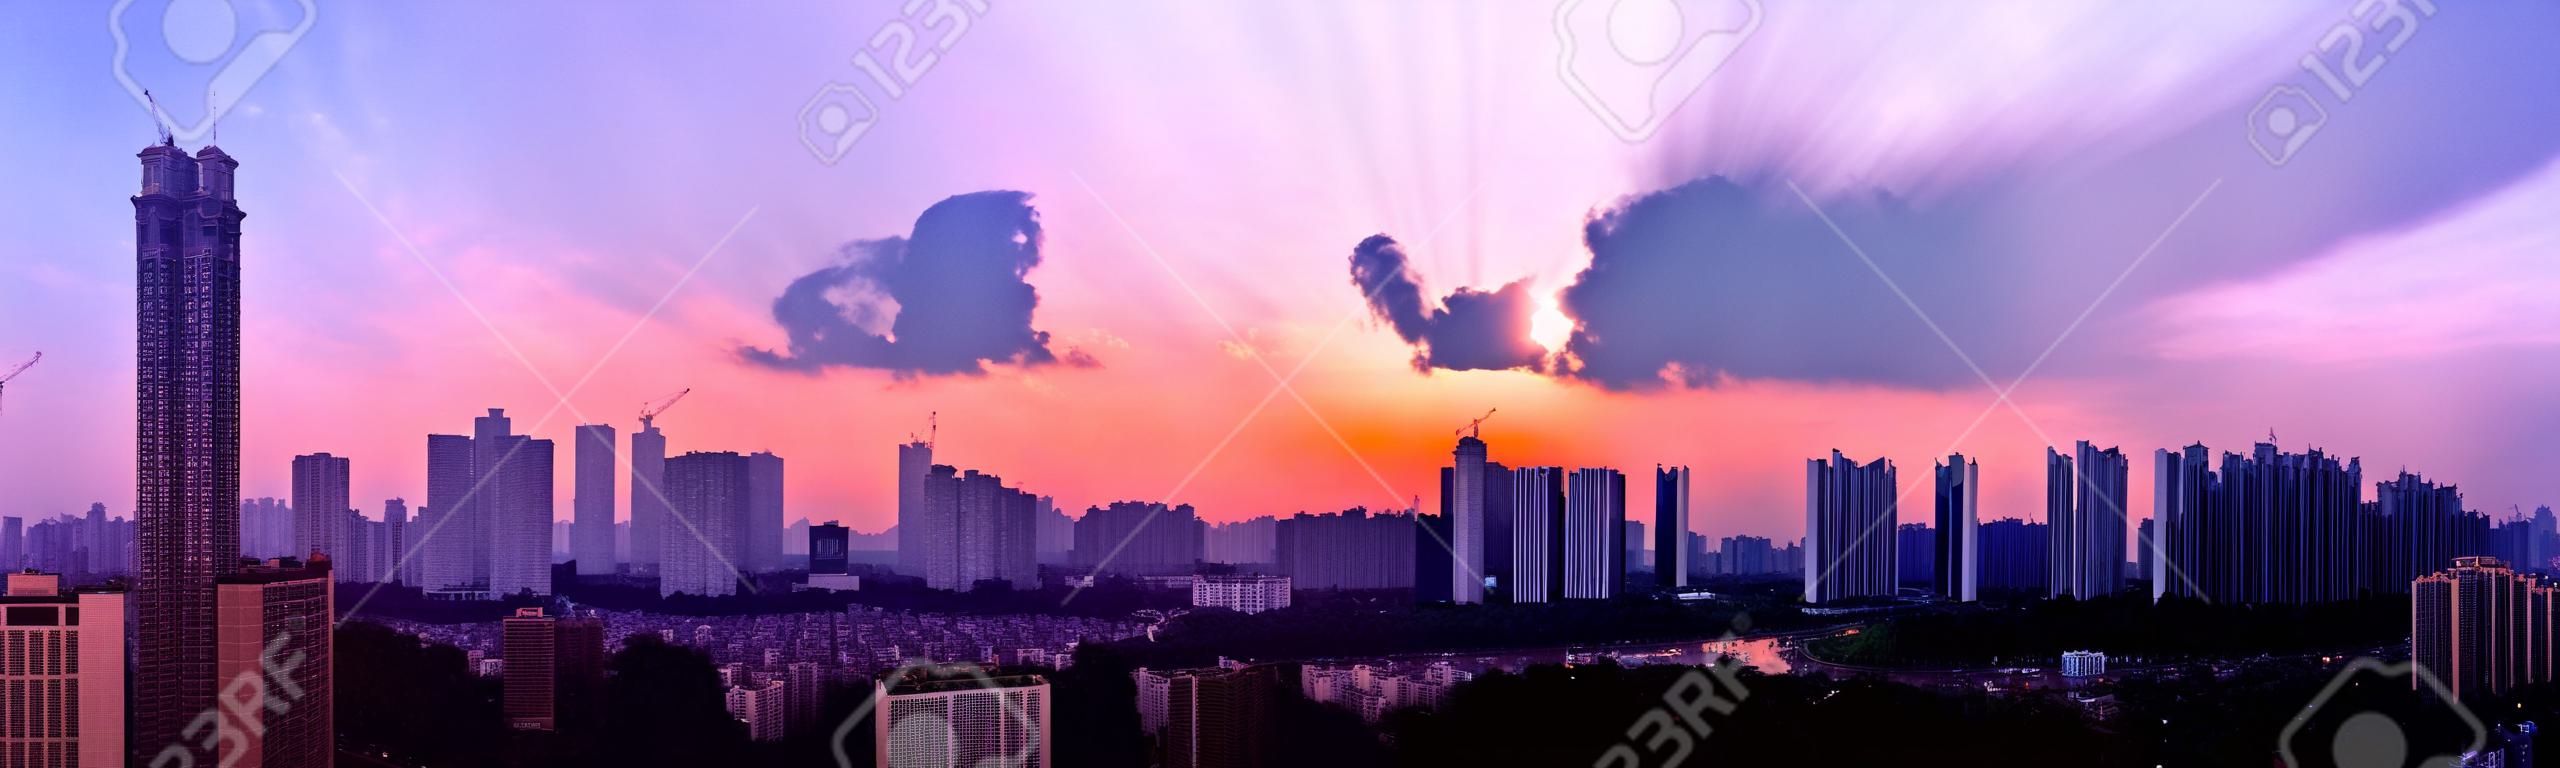 Guangzhou twilight panorama image